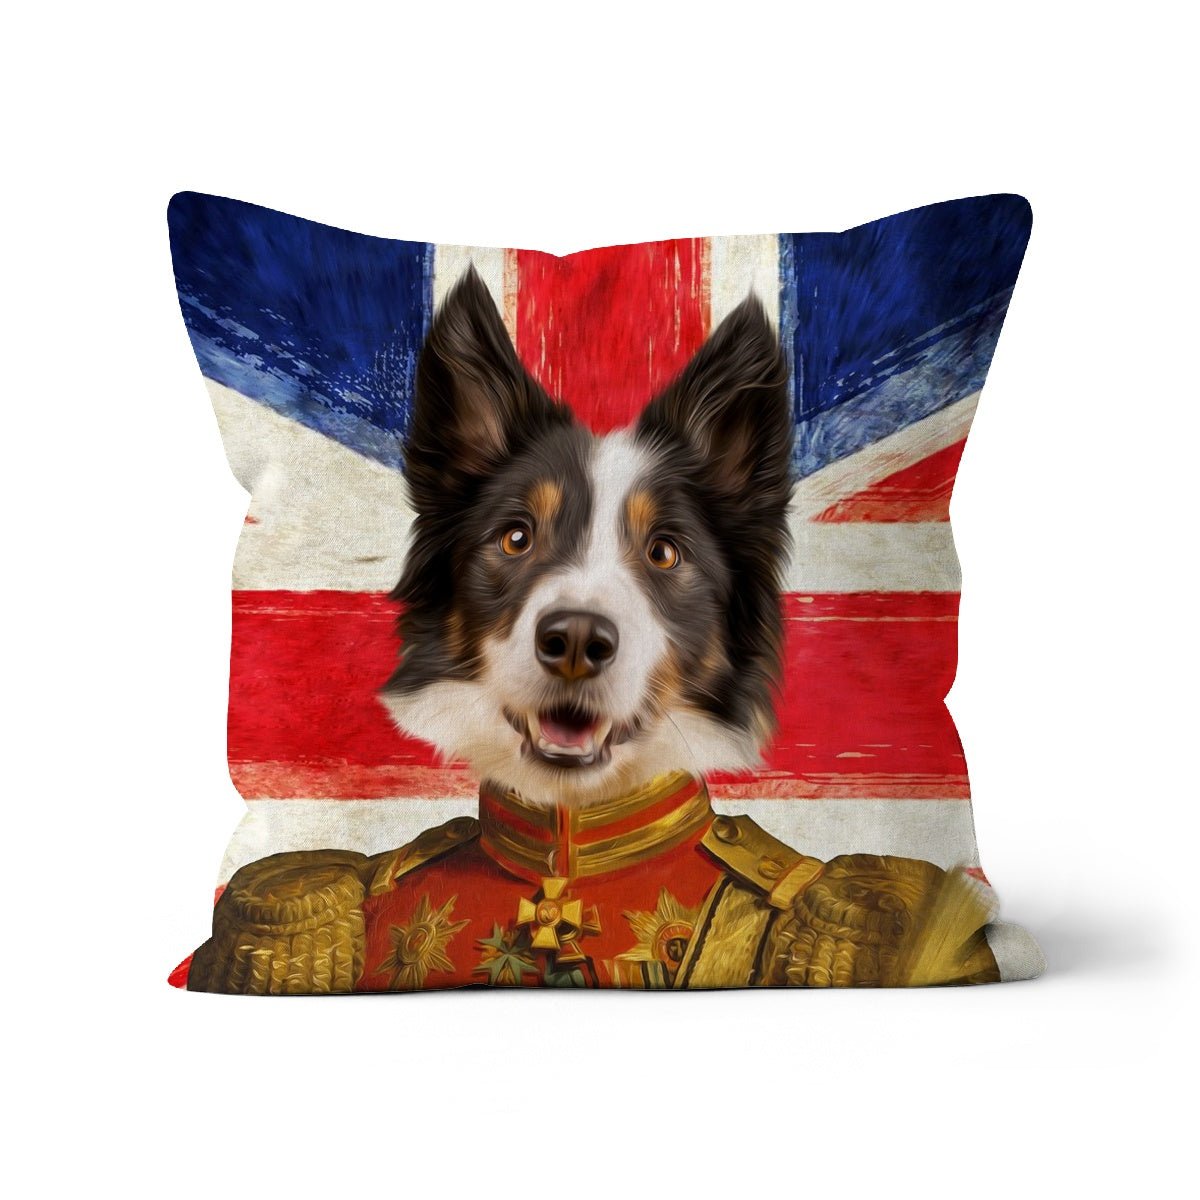 The Duke British Flag Edition: Custom Pet Cushion - Paw & Glory - #pet portraits# - #dog portraits# - #pet portraits uk#paw and glory, custom pet portrait cushion,pet custom pillow, pillows of your dog, custom pillow of pet, dog on pillow, dog photo on pillow